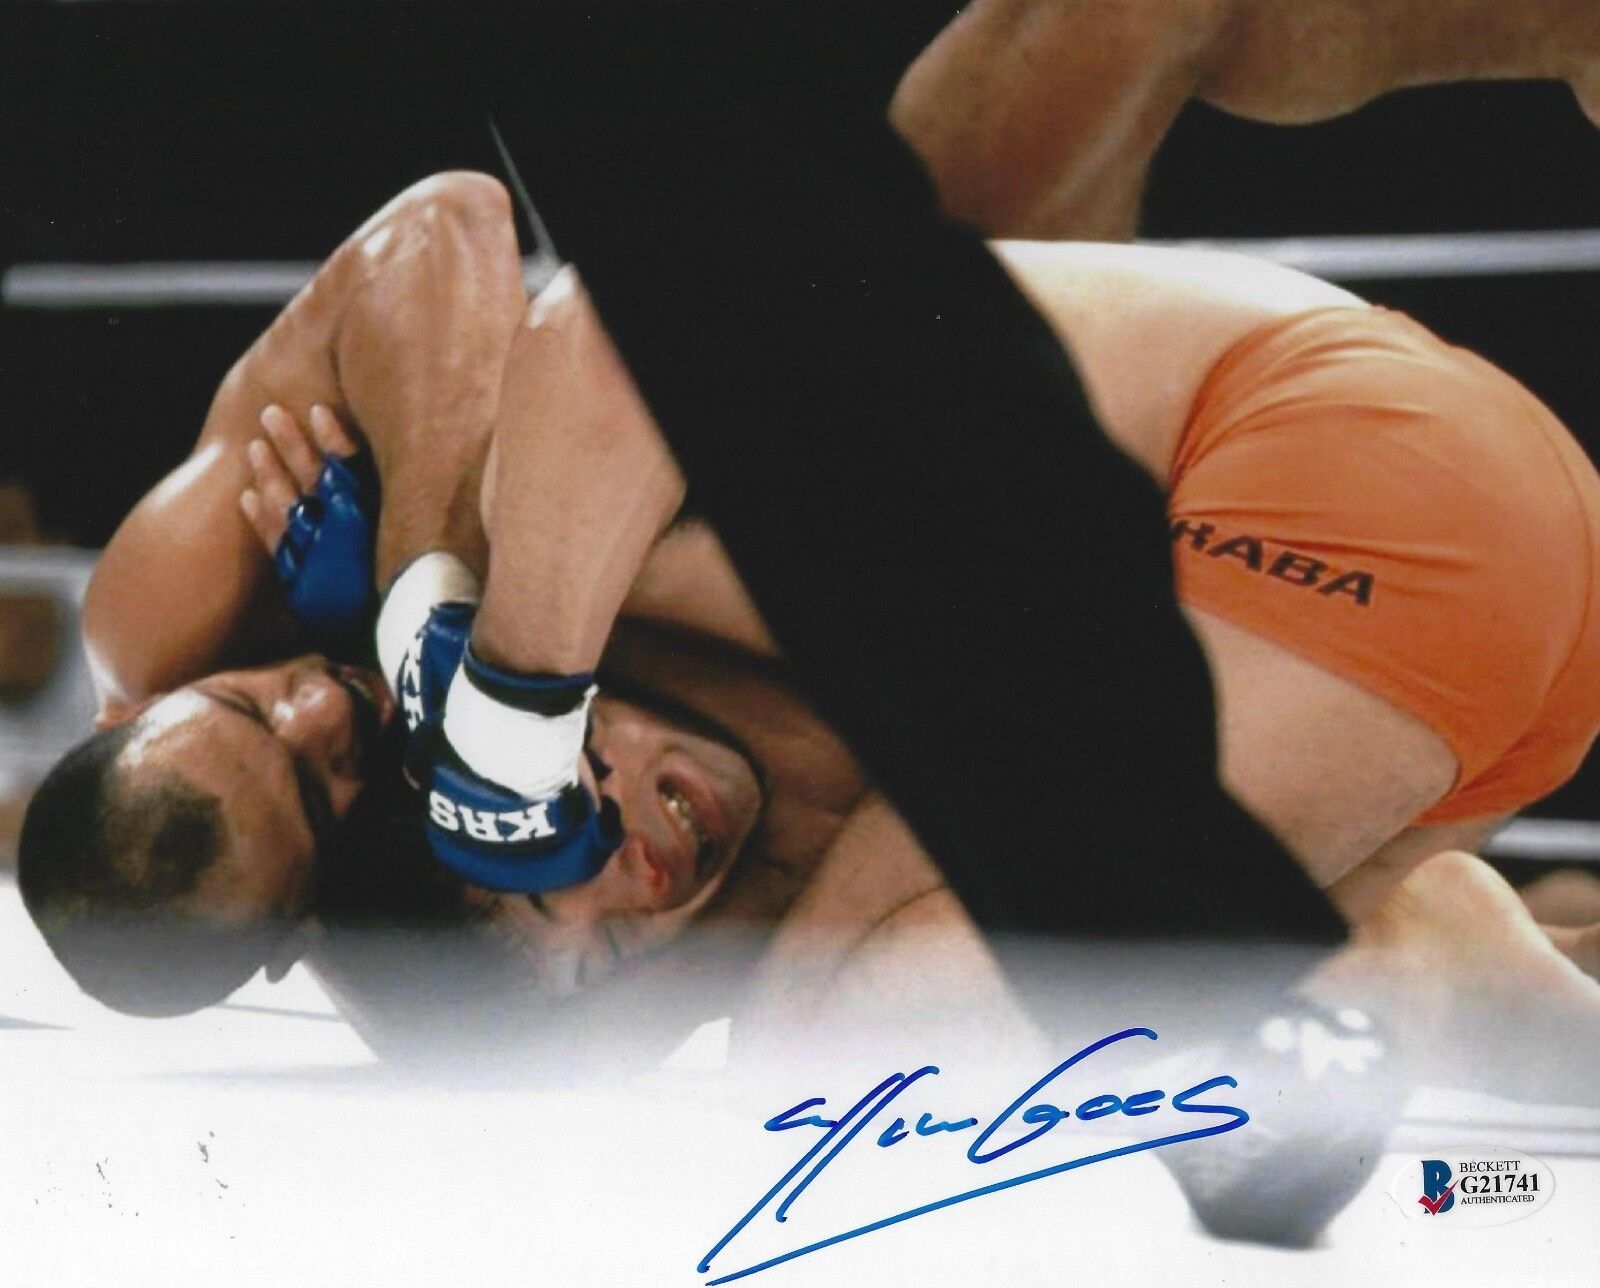 Allan Goes Signed 8x10 Photo Poster painting BAS Beckett COA UFC Pride FC 4 v Kazushi Sakuraba 1